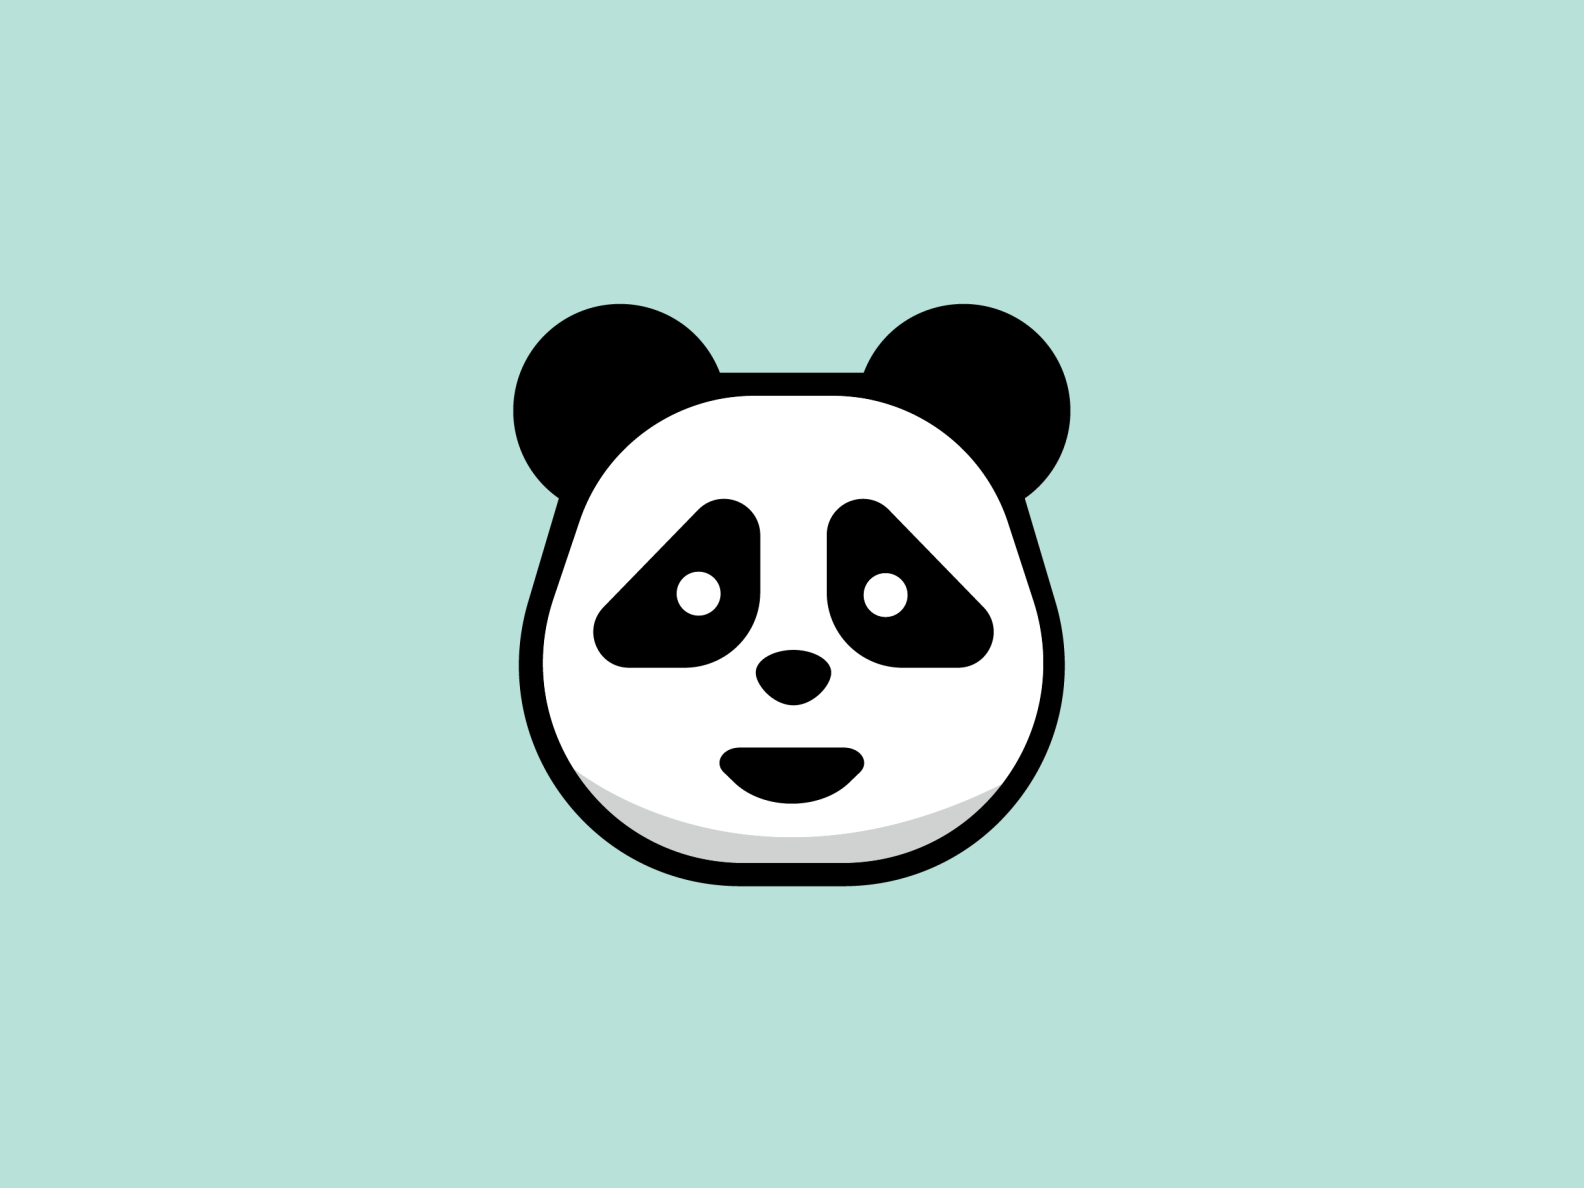 Cute Panda Cartoon by Superdon on Dribbble